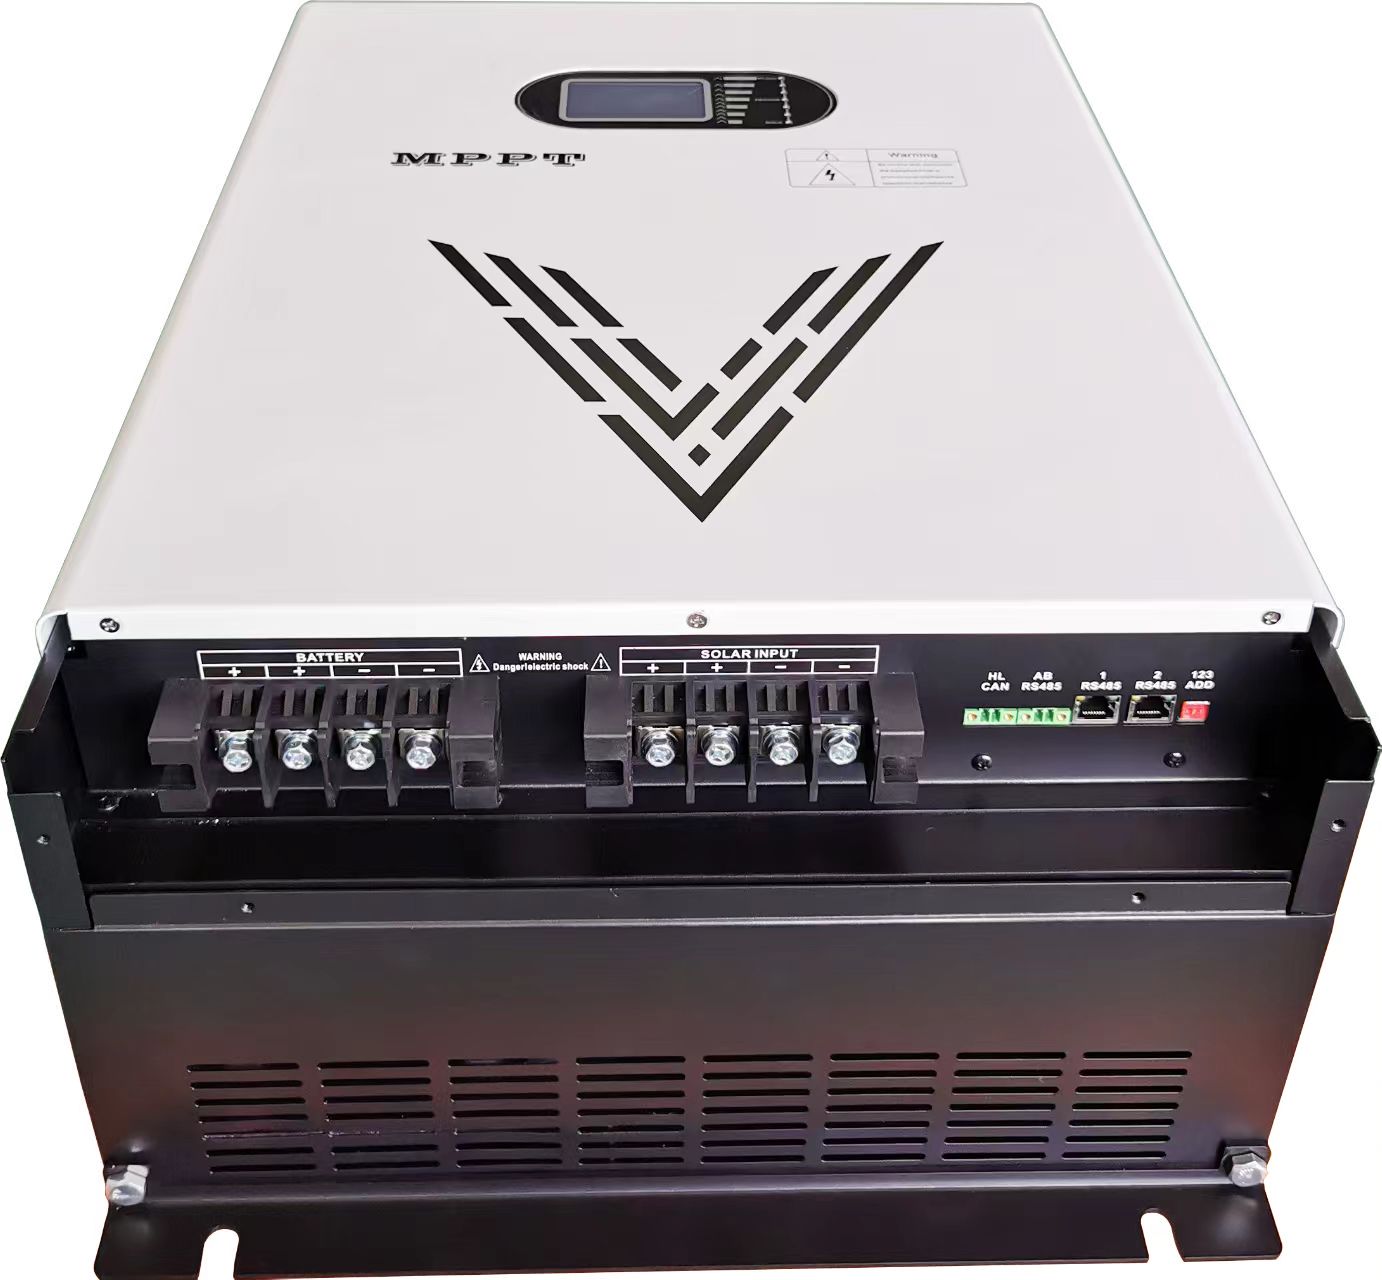 LVC Series MPPT SCC 12V/24V/48V 2400W Solar Controller